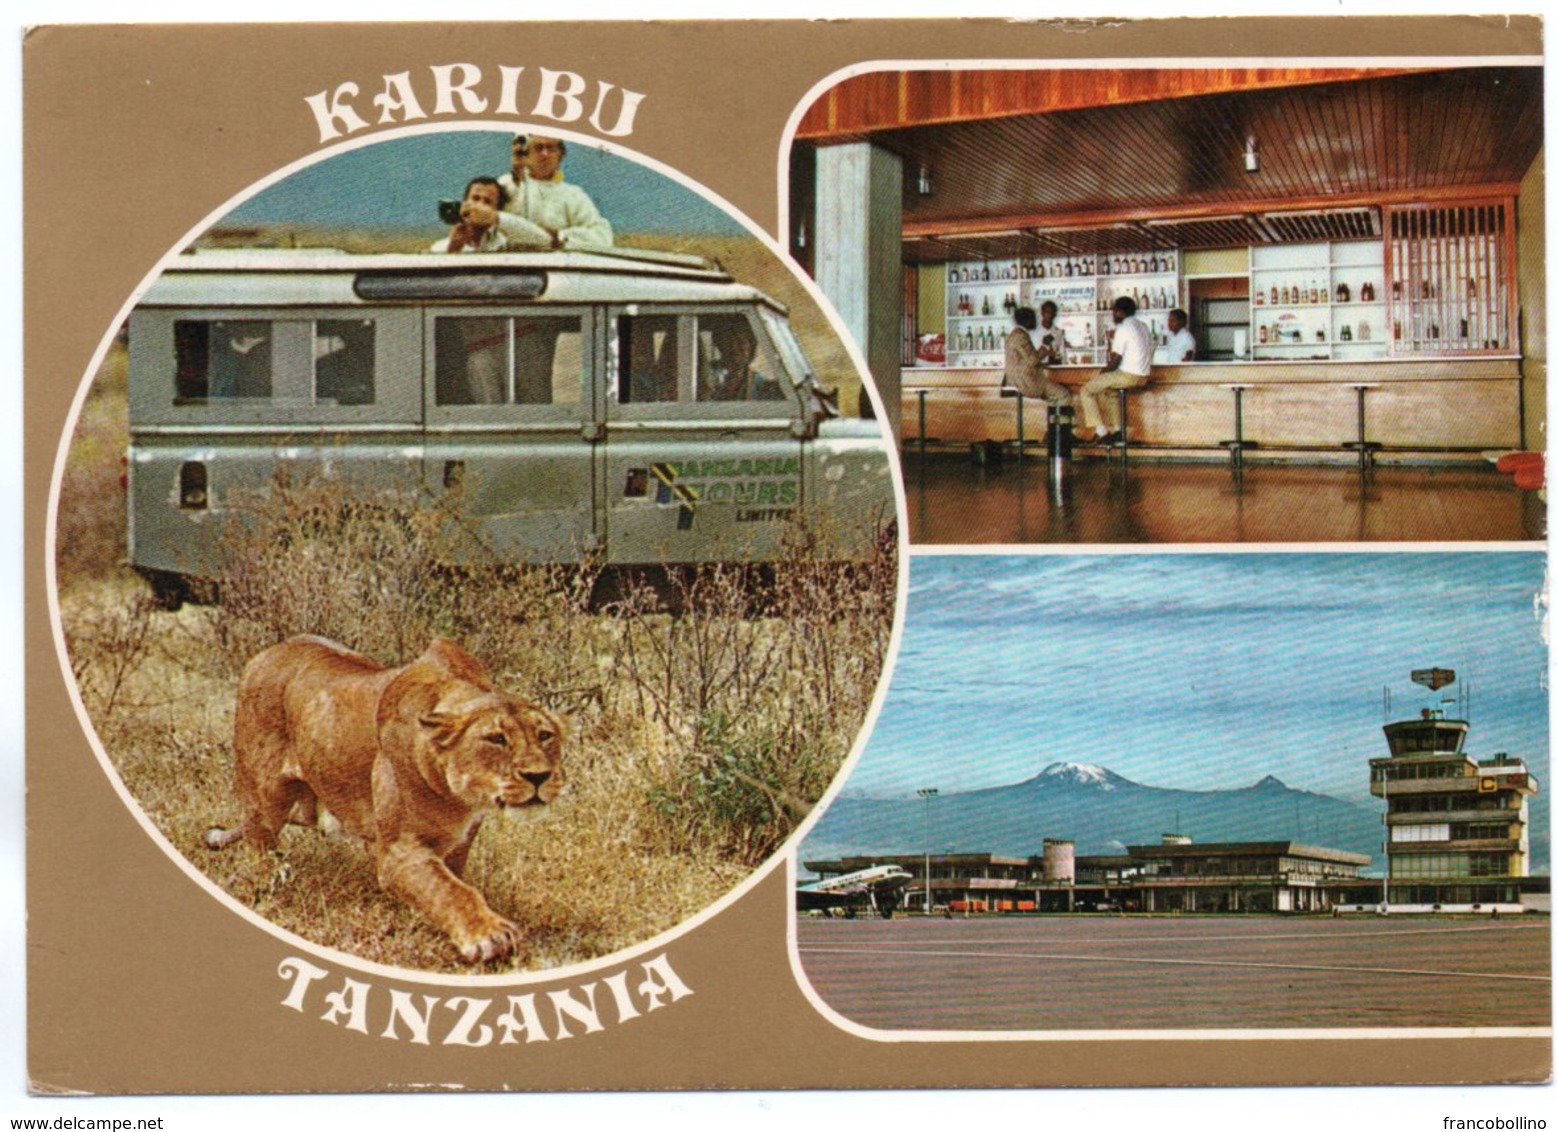 TANZANIA - KARIBU / AIRPORT / OLD CAR-LAND ROVER / THEMATIC STAMPS-BUTTERFLY / TRAIN - RAILWAYS - BRIDGE - Tanzania